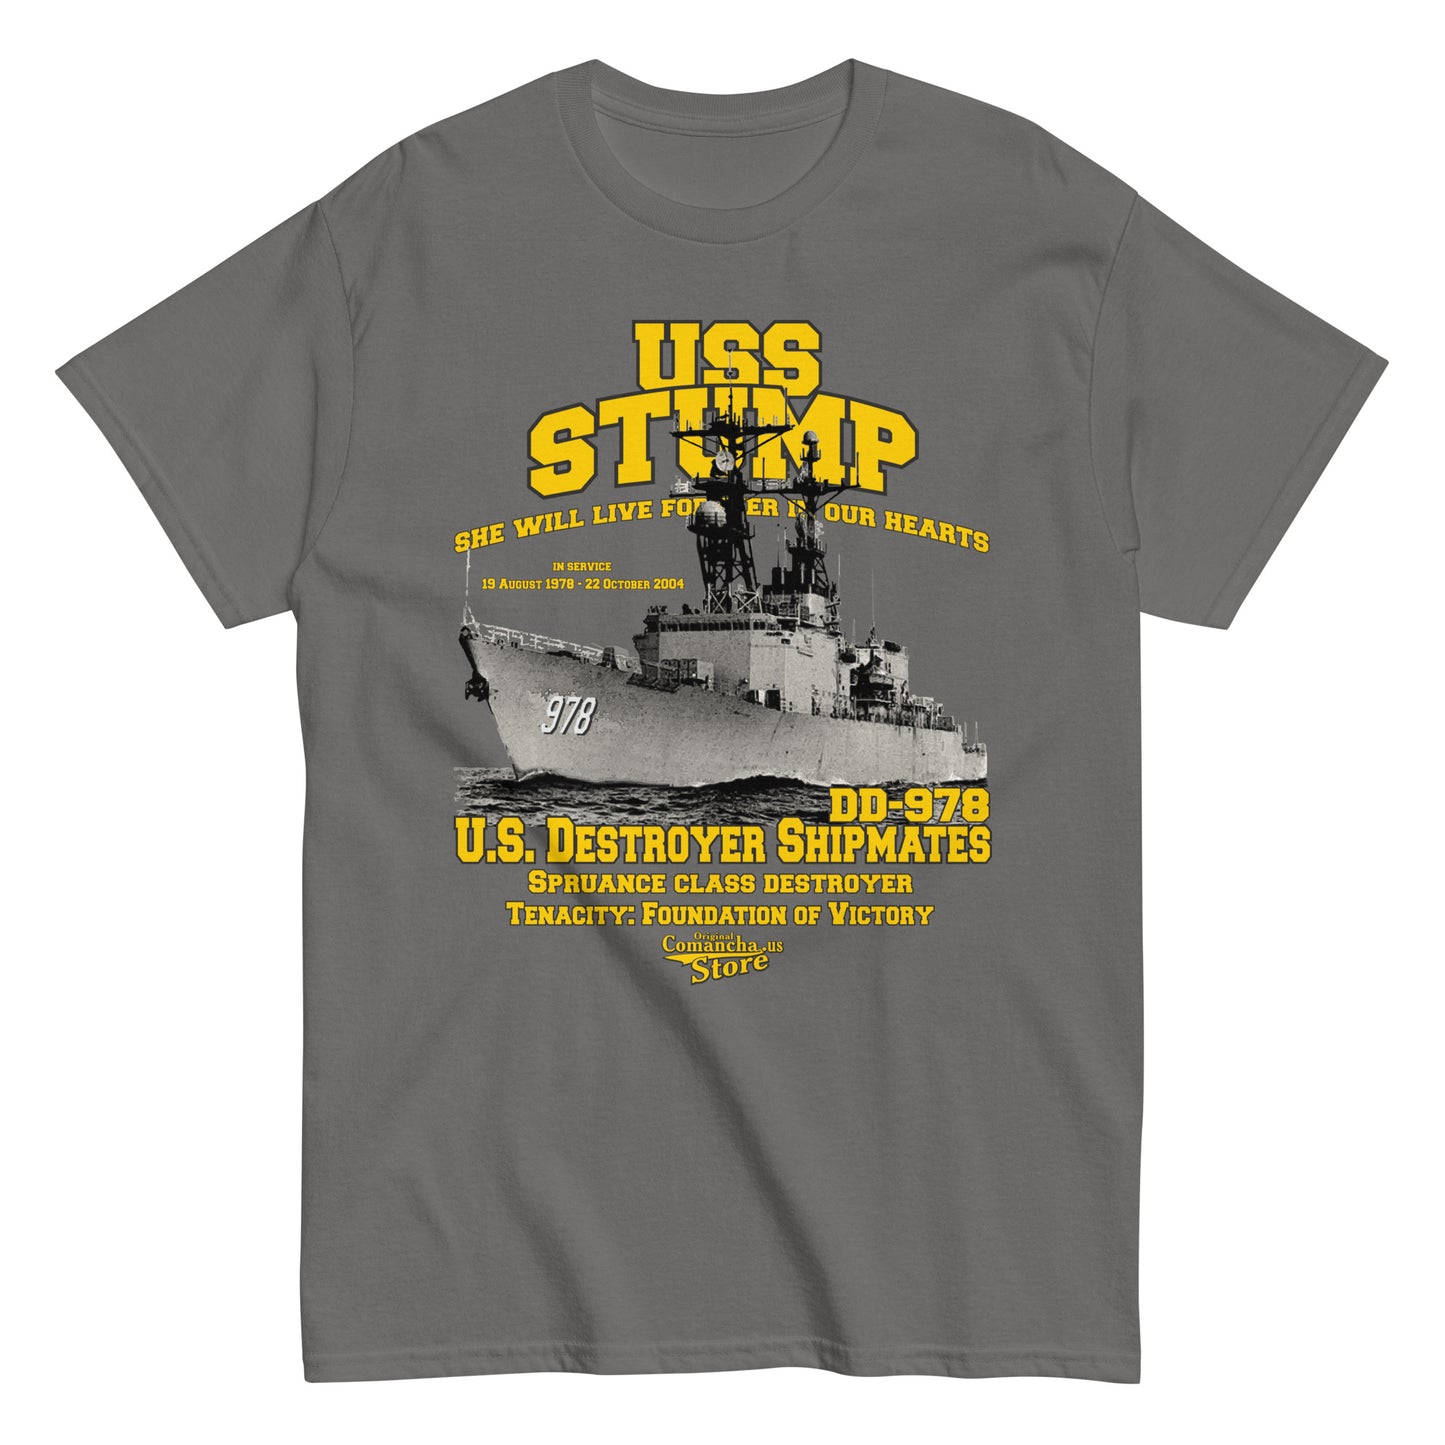 USS Stump DD-978 Shipmates t-shirt